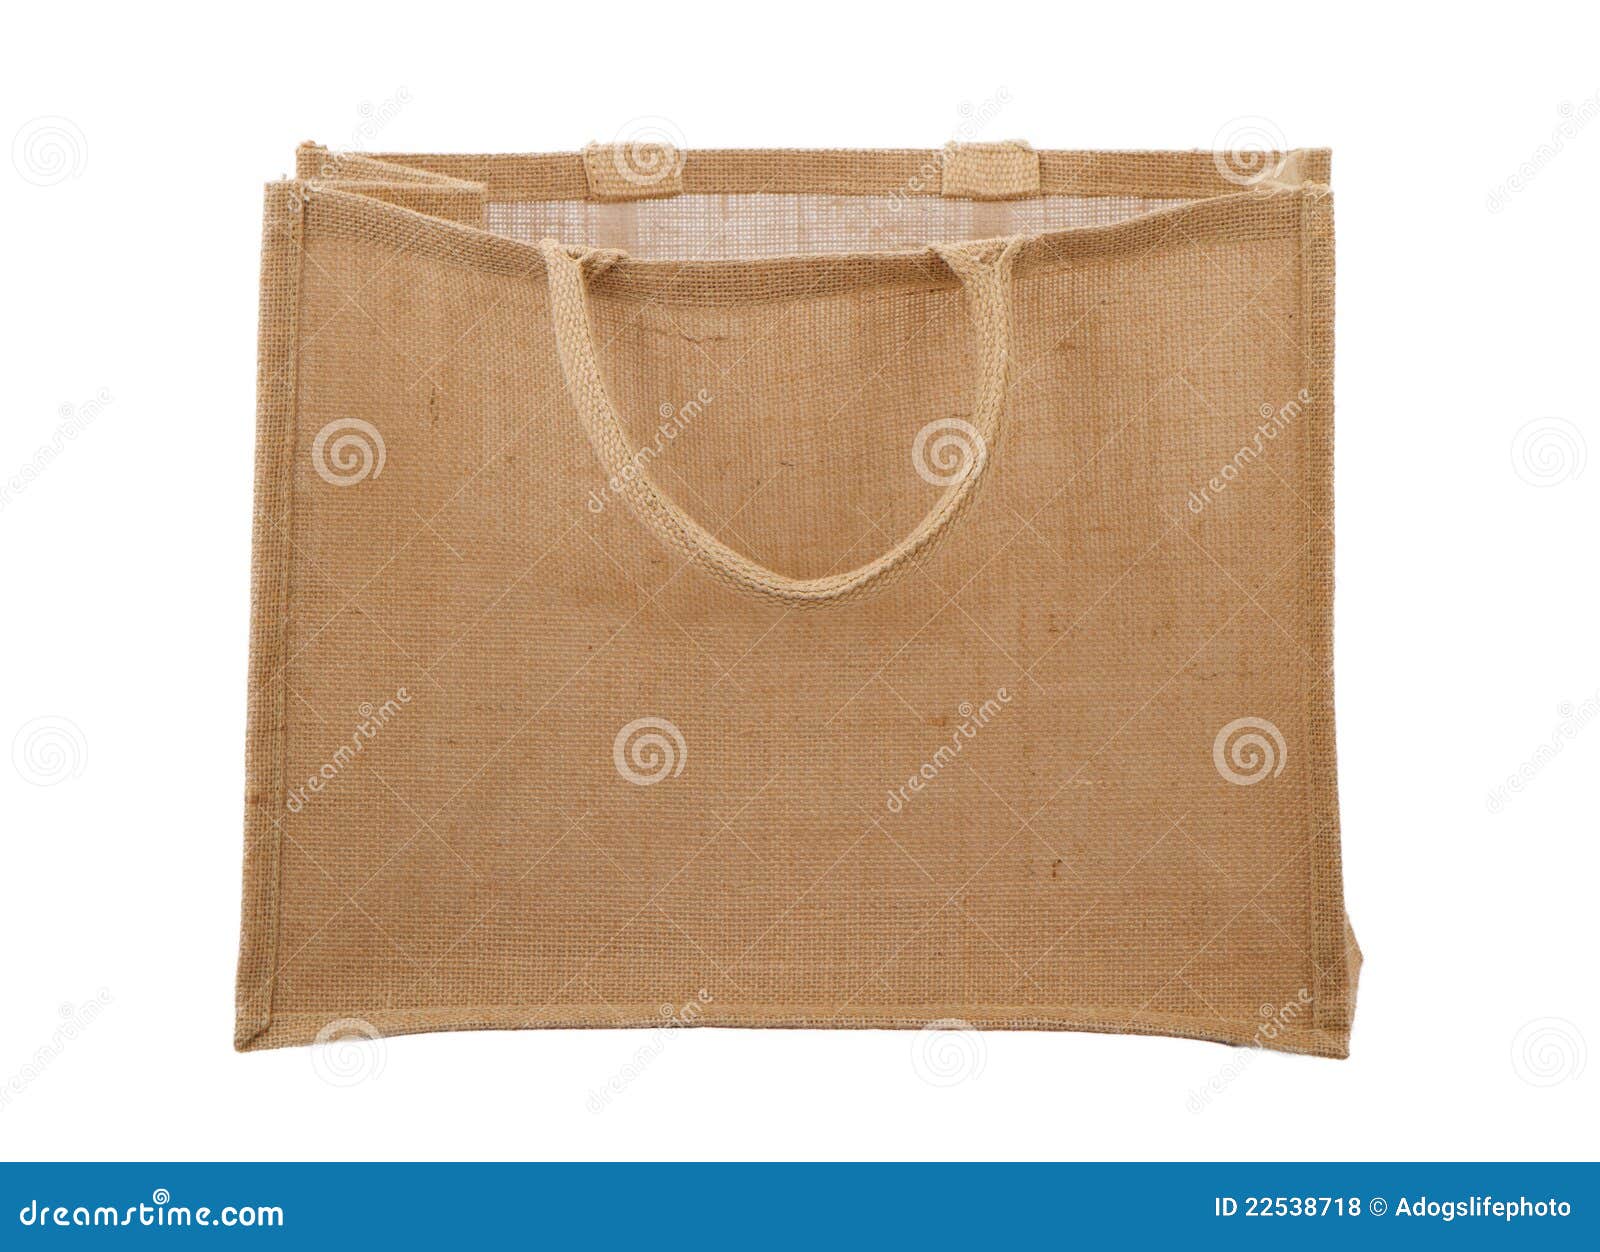 natural fiber reusable shopping bag